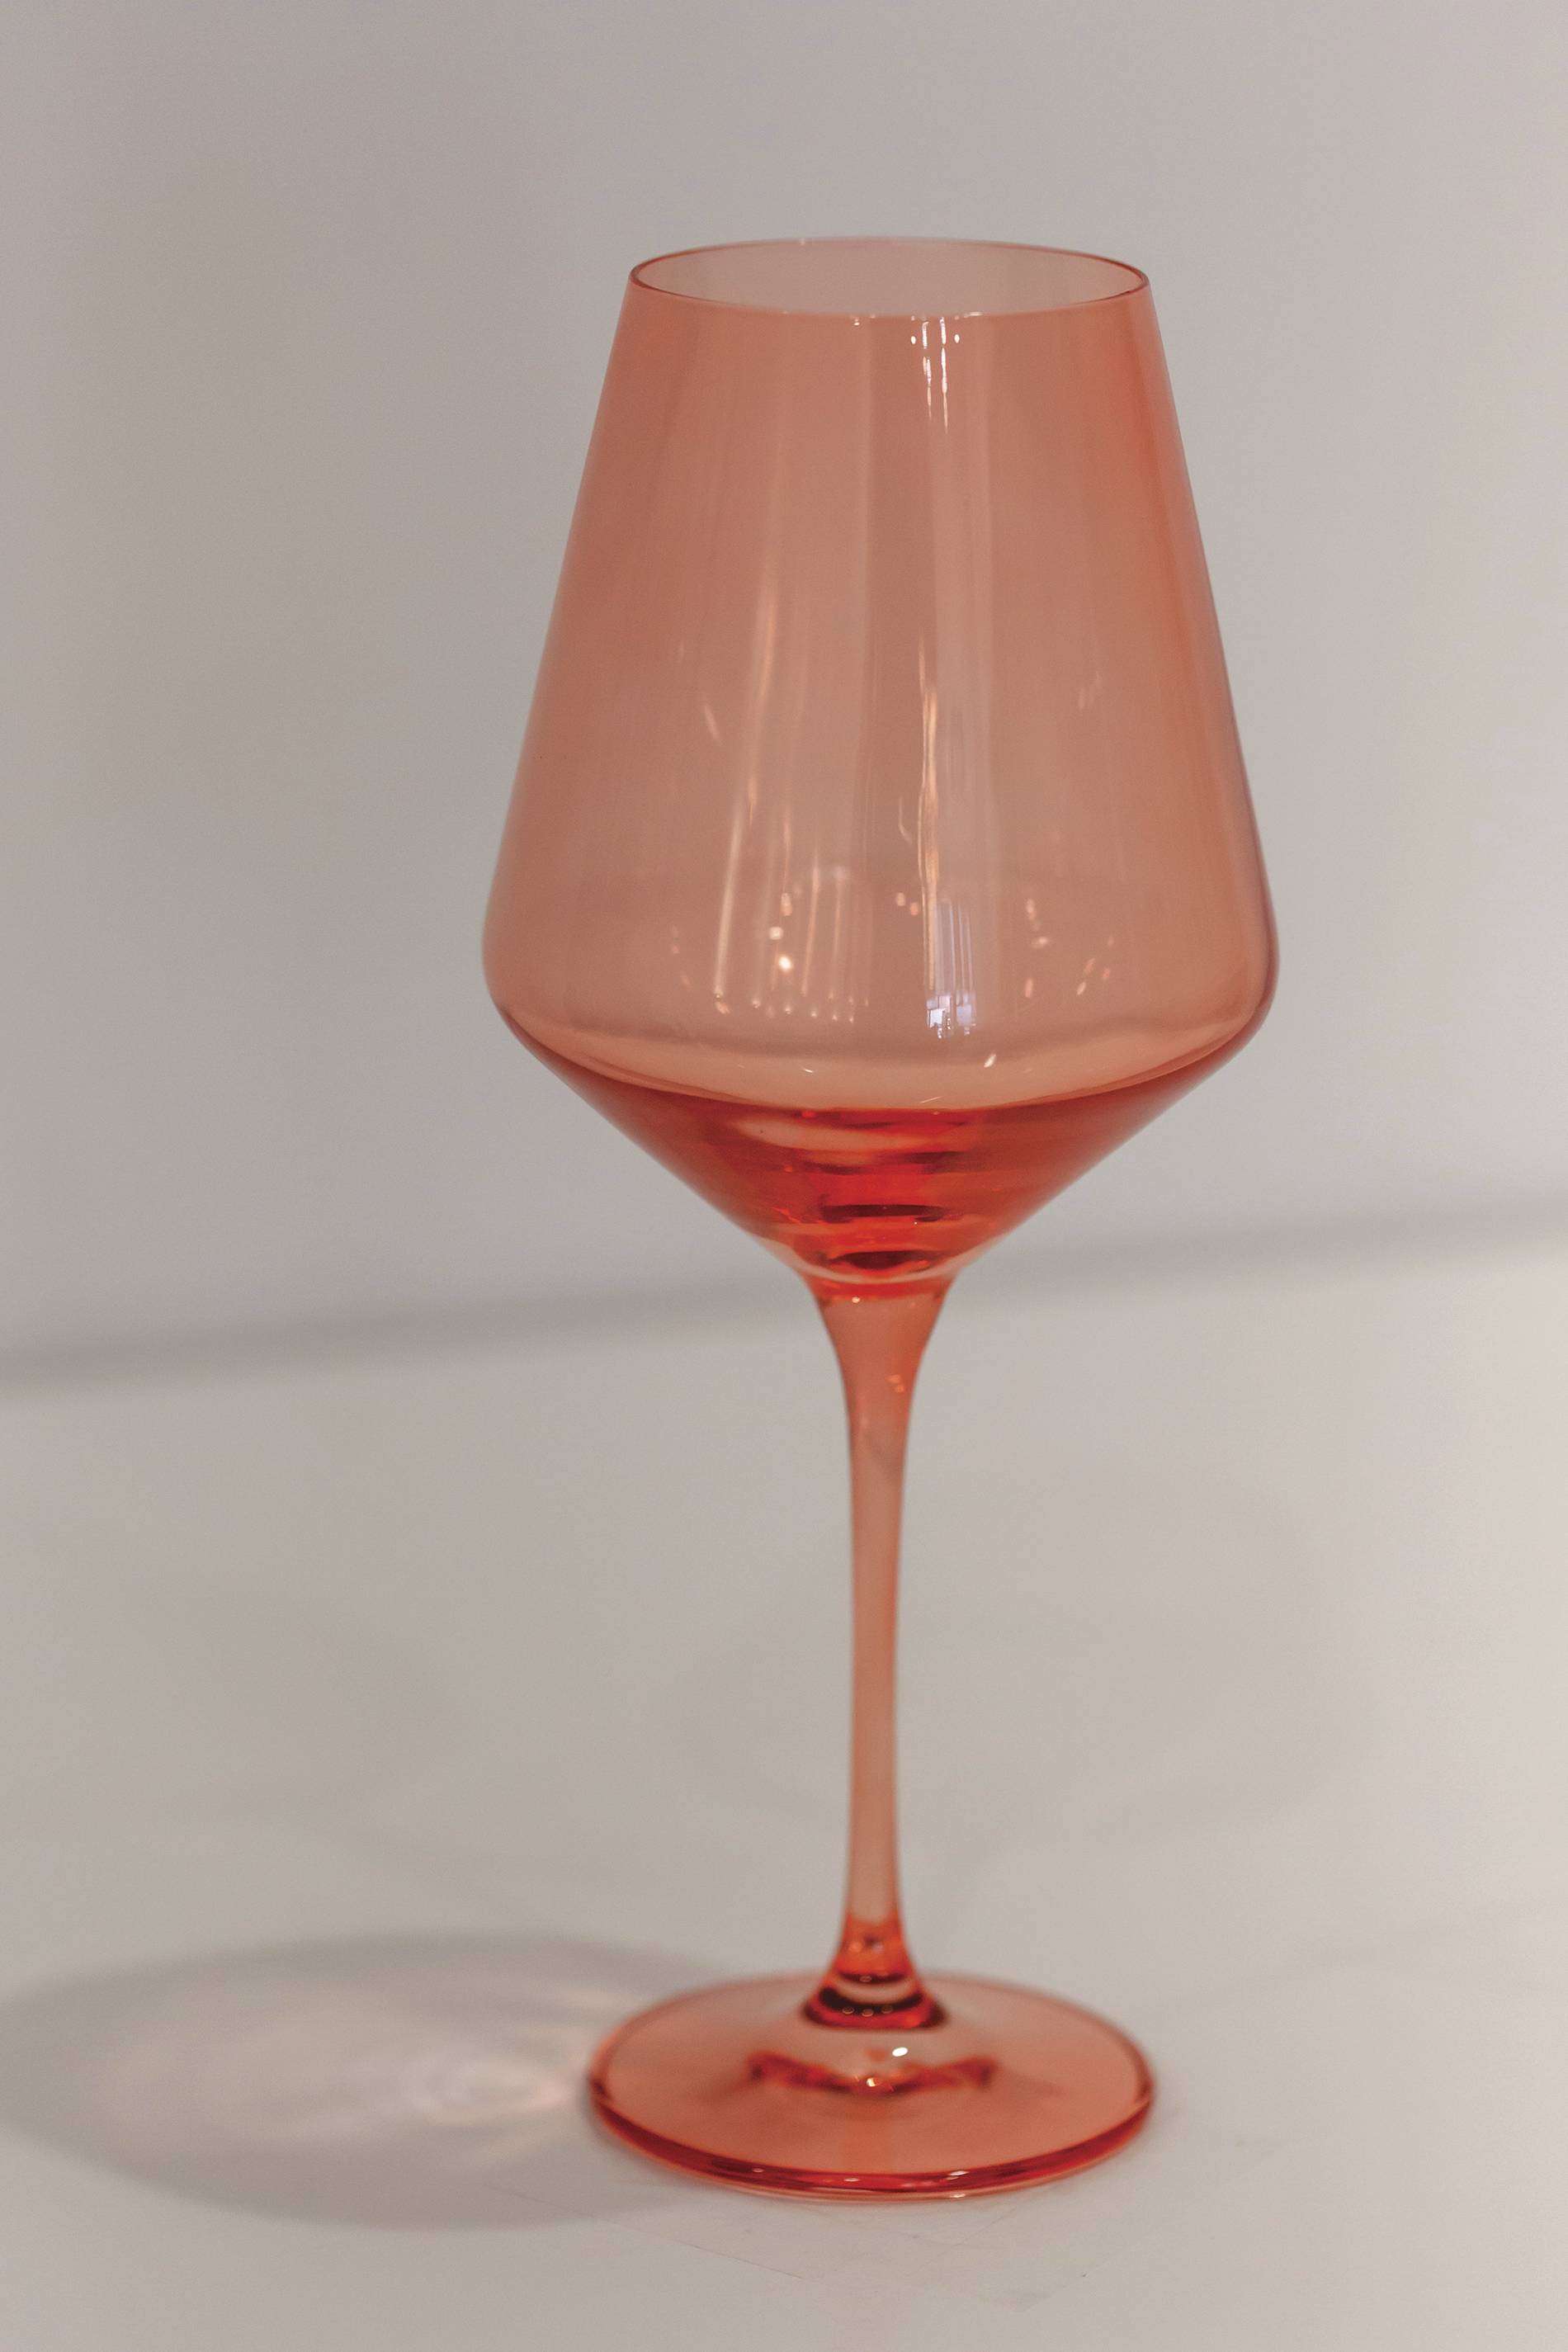 Estelle wine glass in Coral Peach Pink